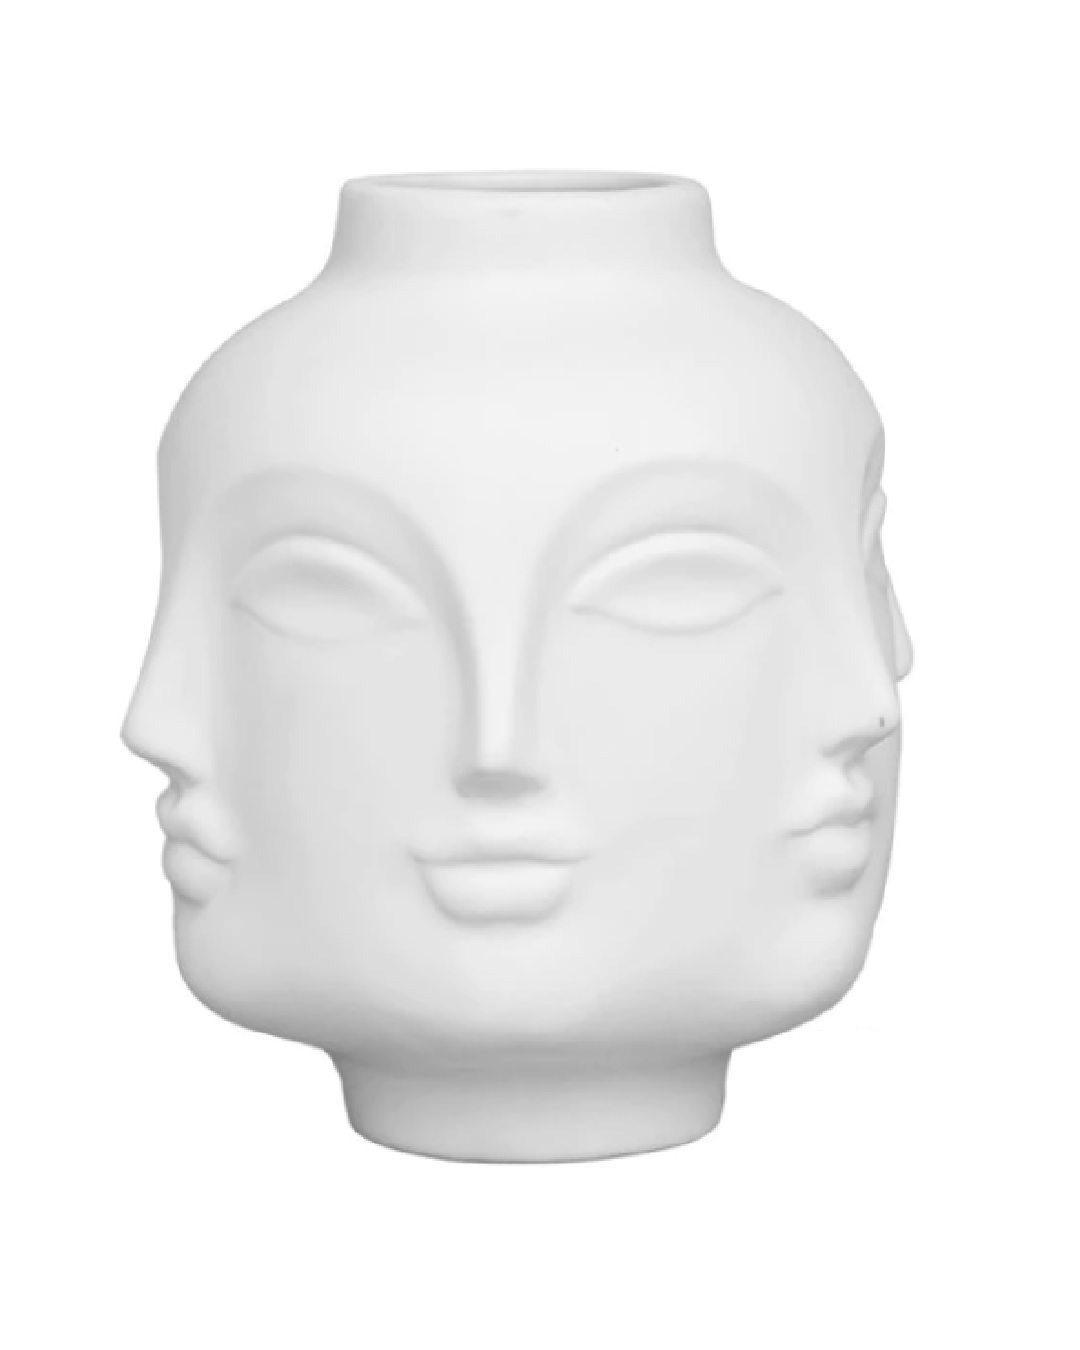 Creative face vase